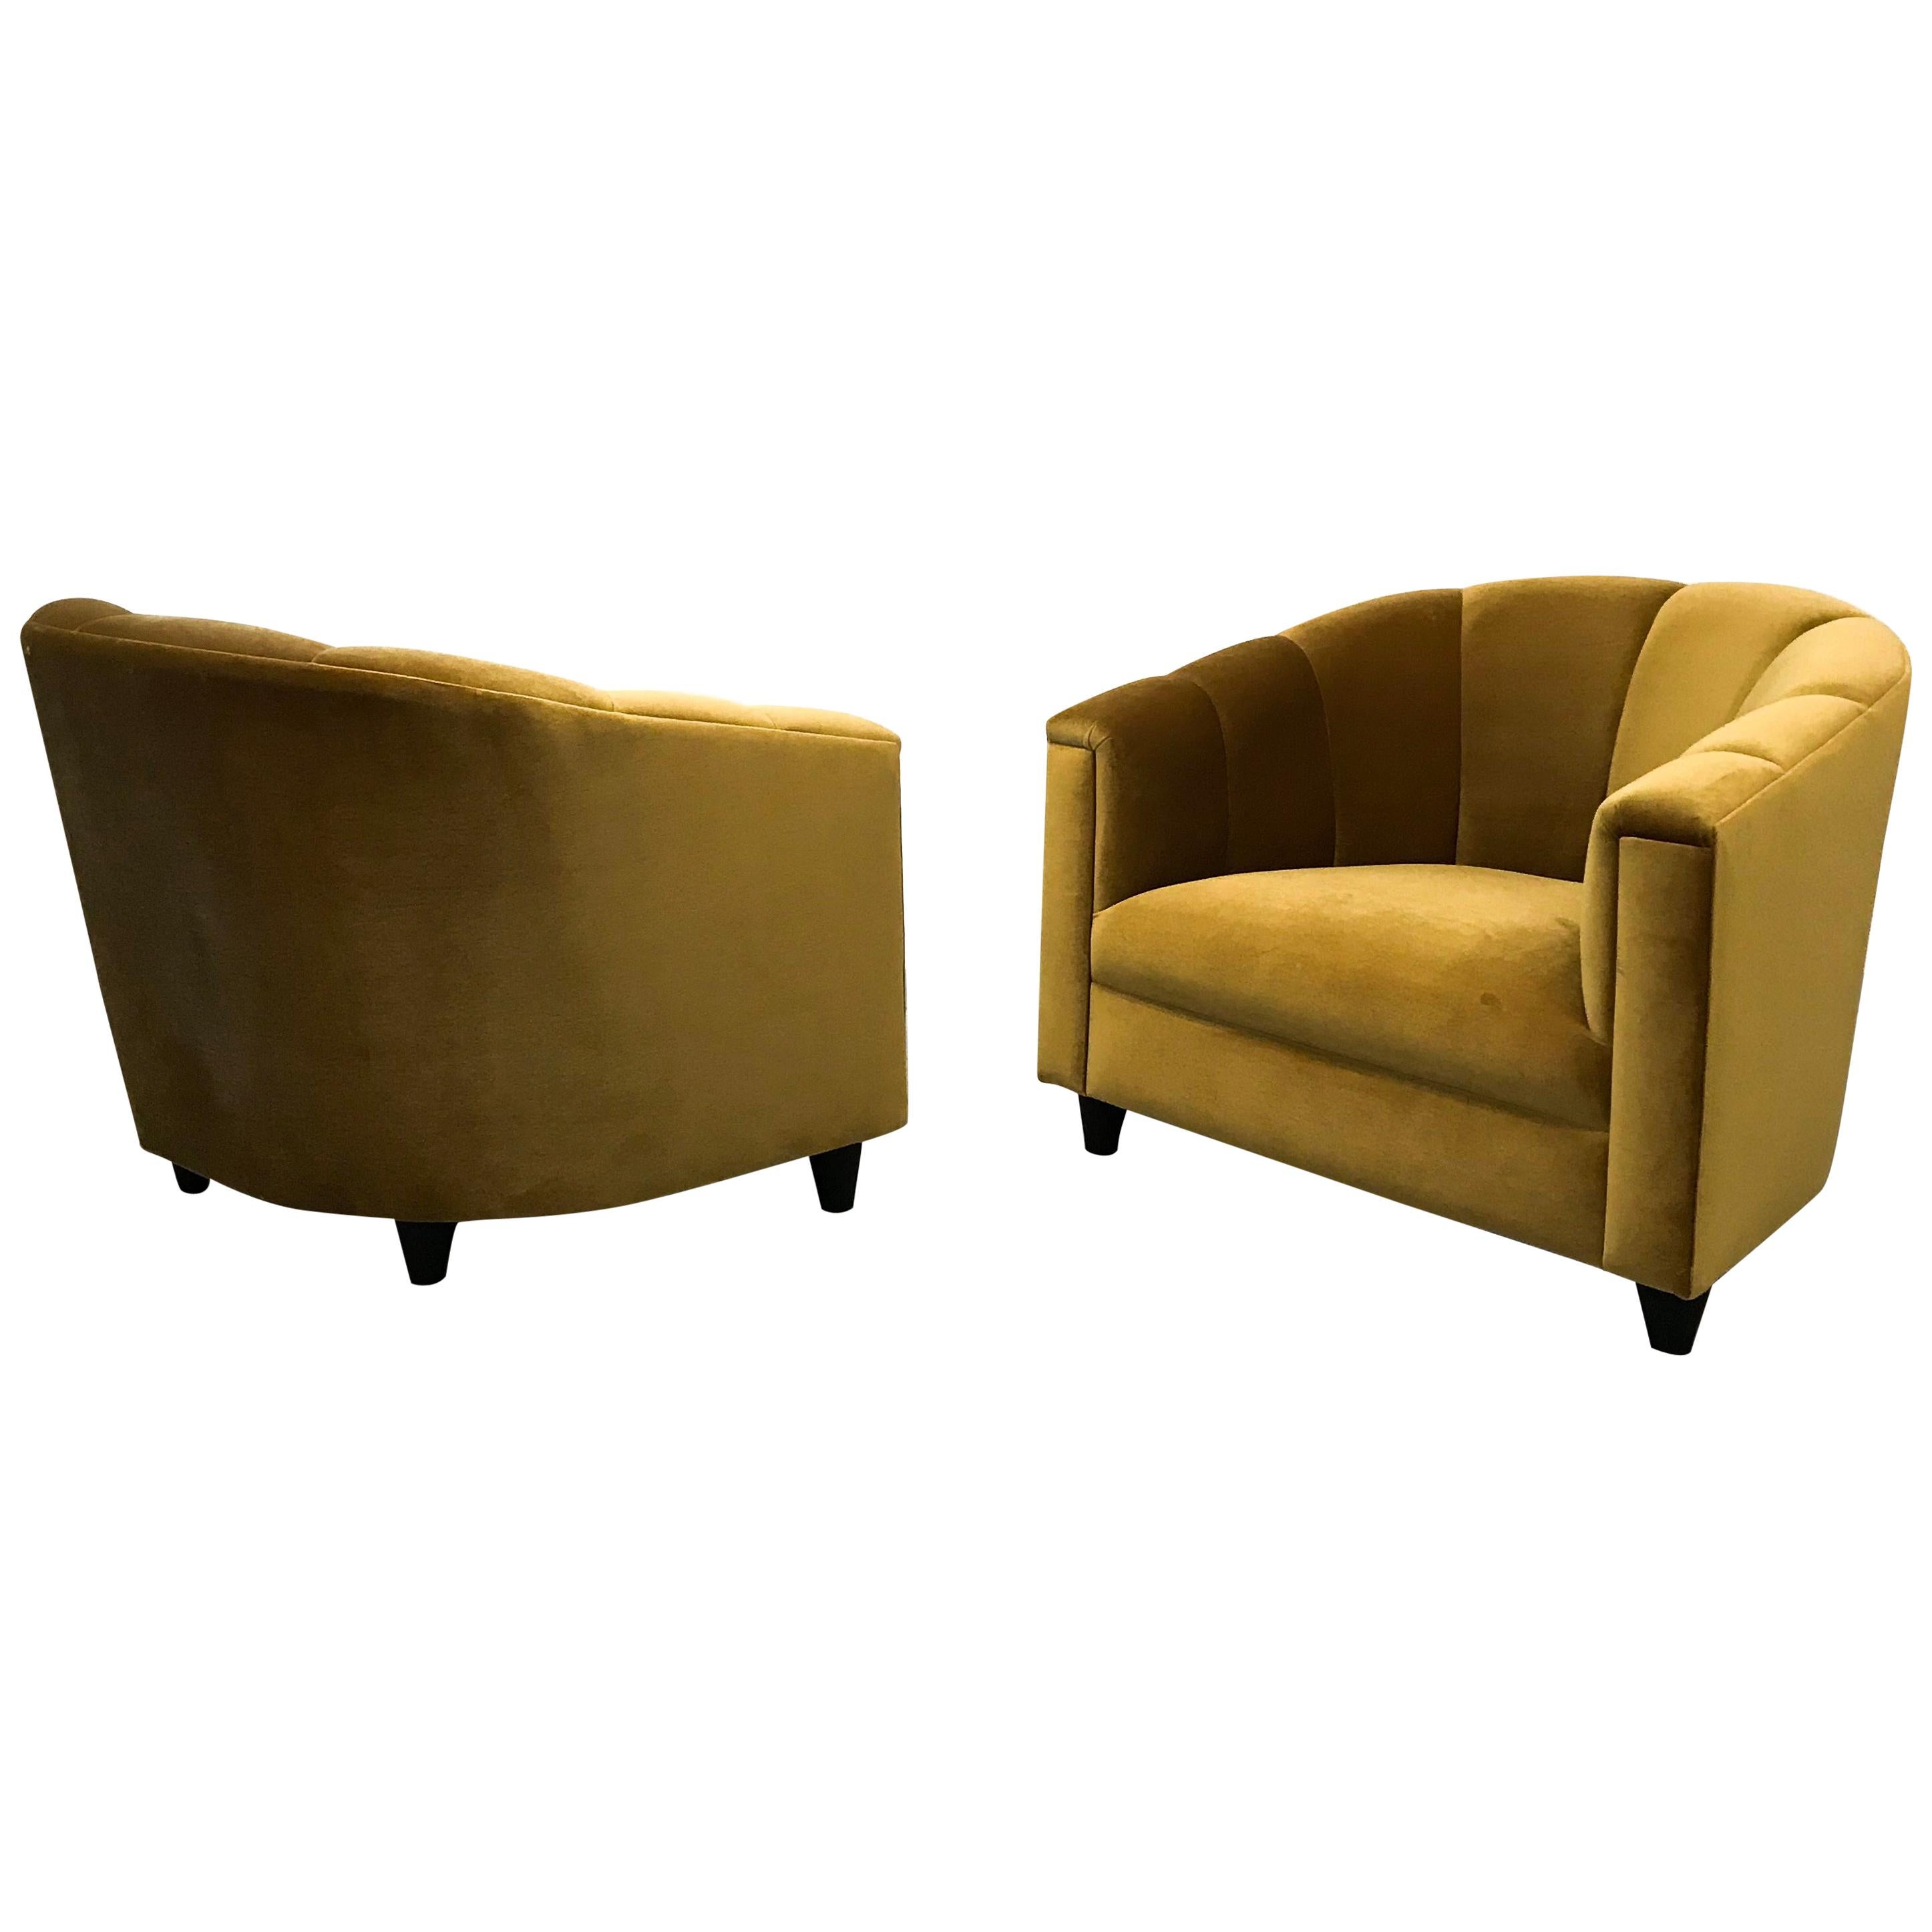 Art Deco Style Pair of Club Chairs, Golden Velvet, by Watt Studio For Sale